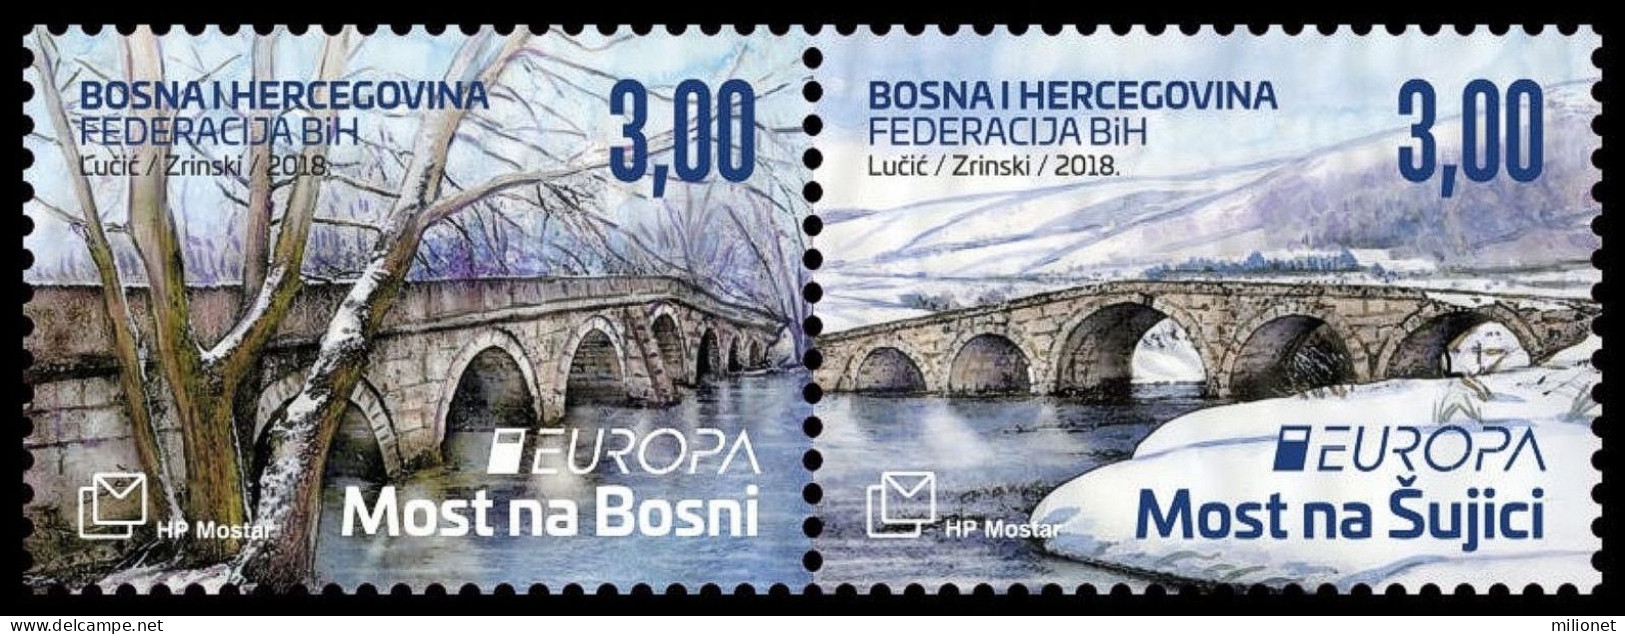 SALE!!! BOSNIA HERZEGOVINA CROAT POST (MOSTAR) 2018 EUROPA CEPT Bridges 2 Stamp Set Se-tenant MNH ** - 2018